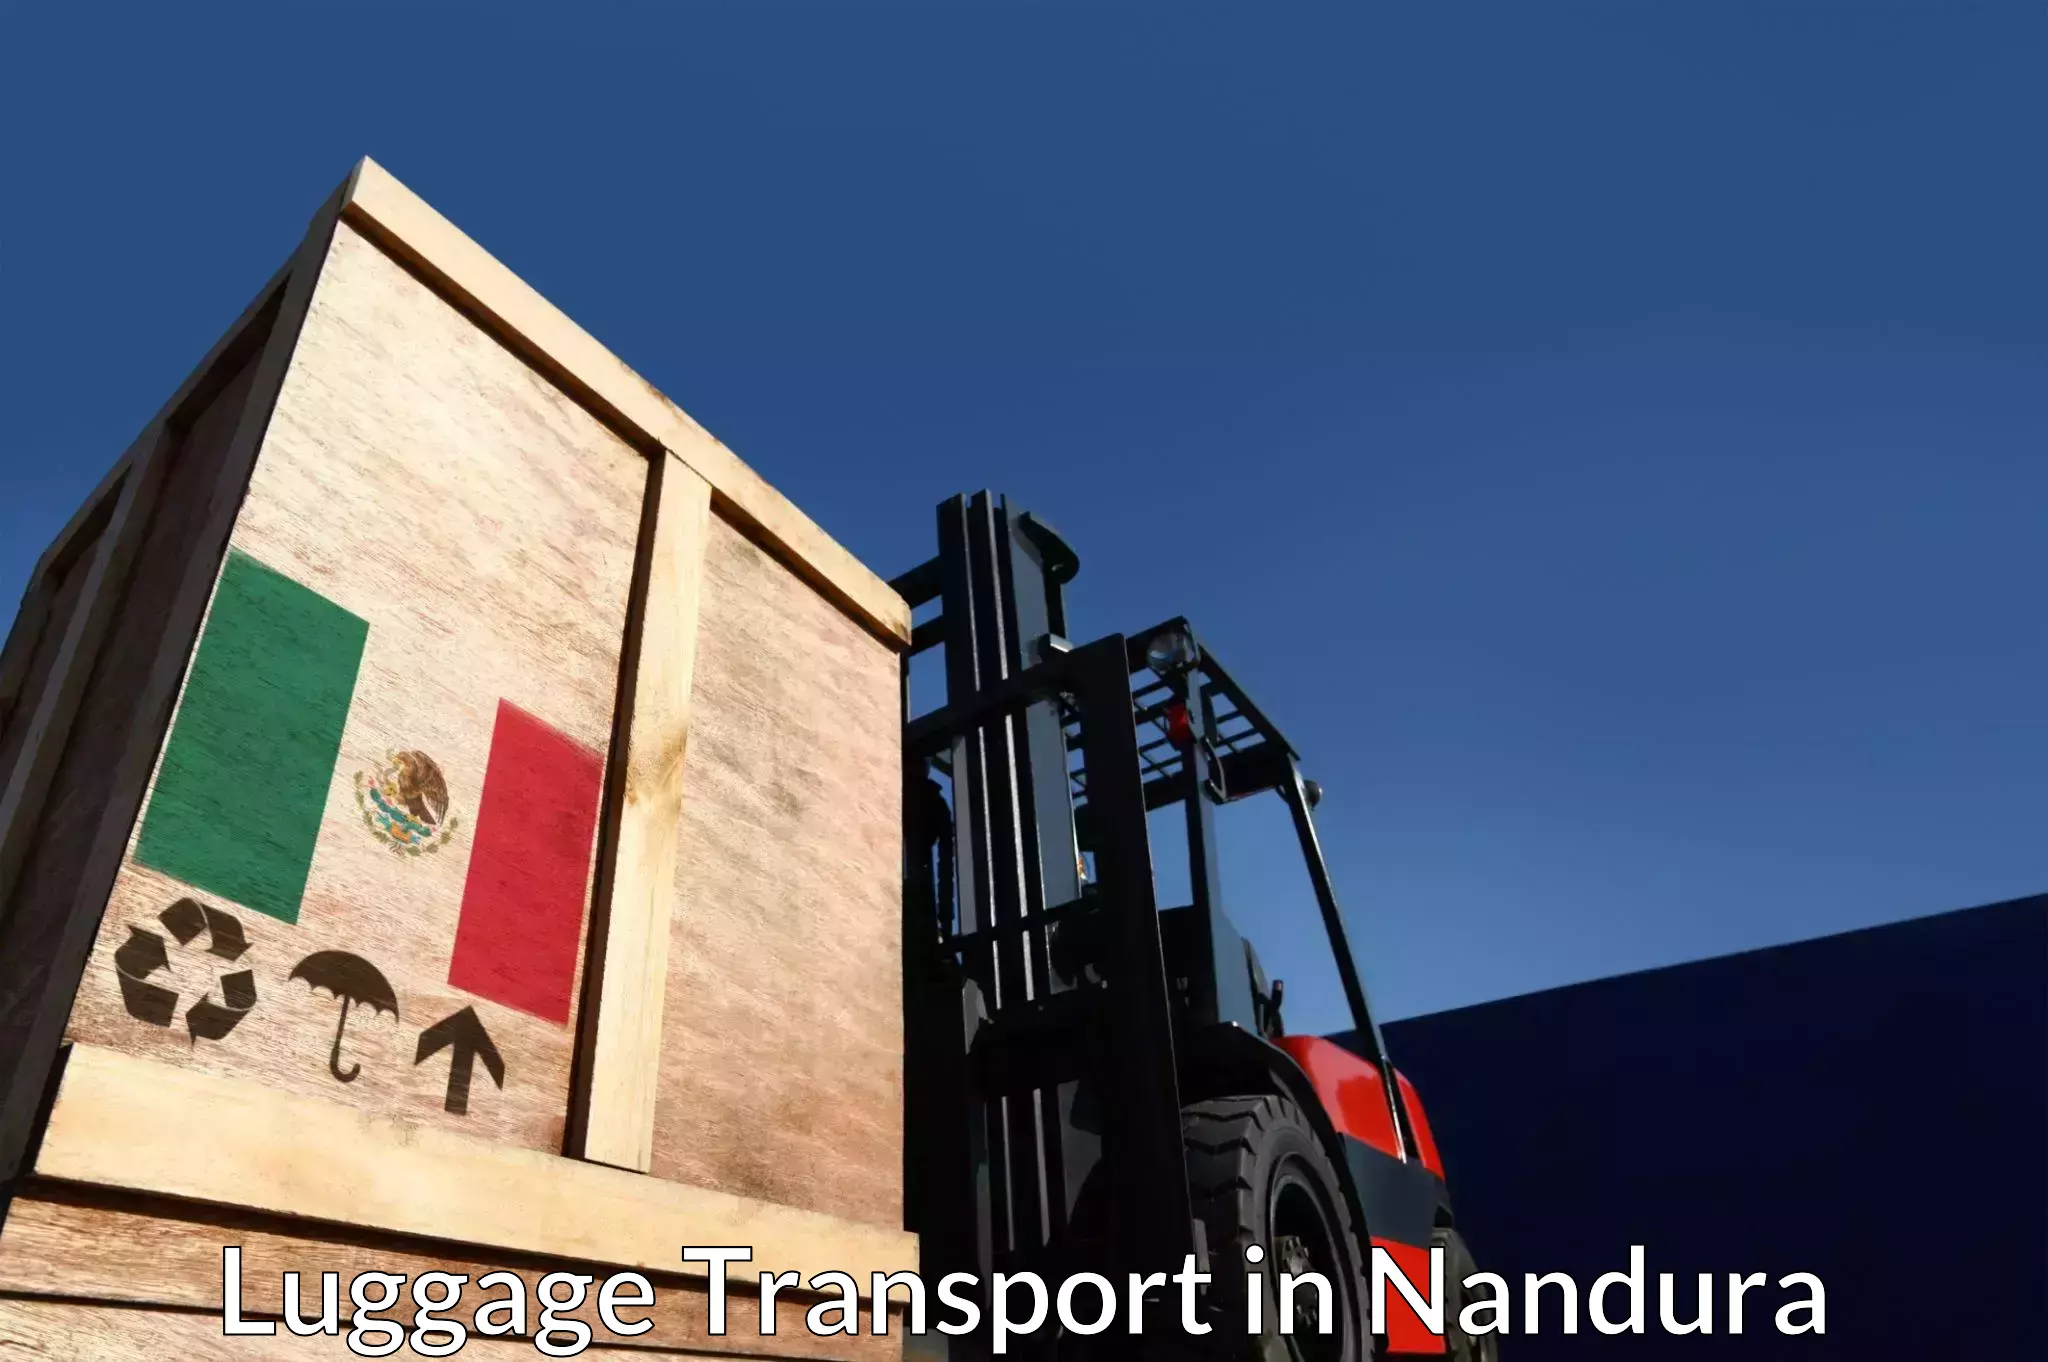 Baggage transport network in Nandura